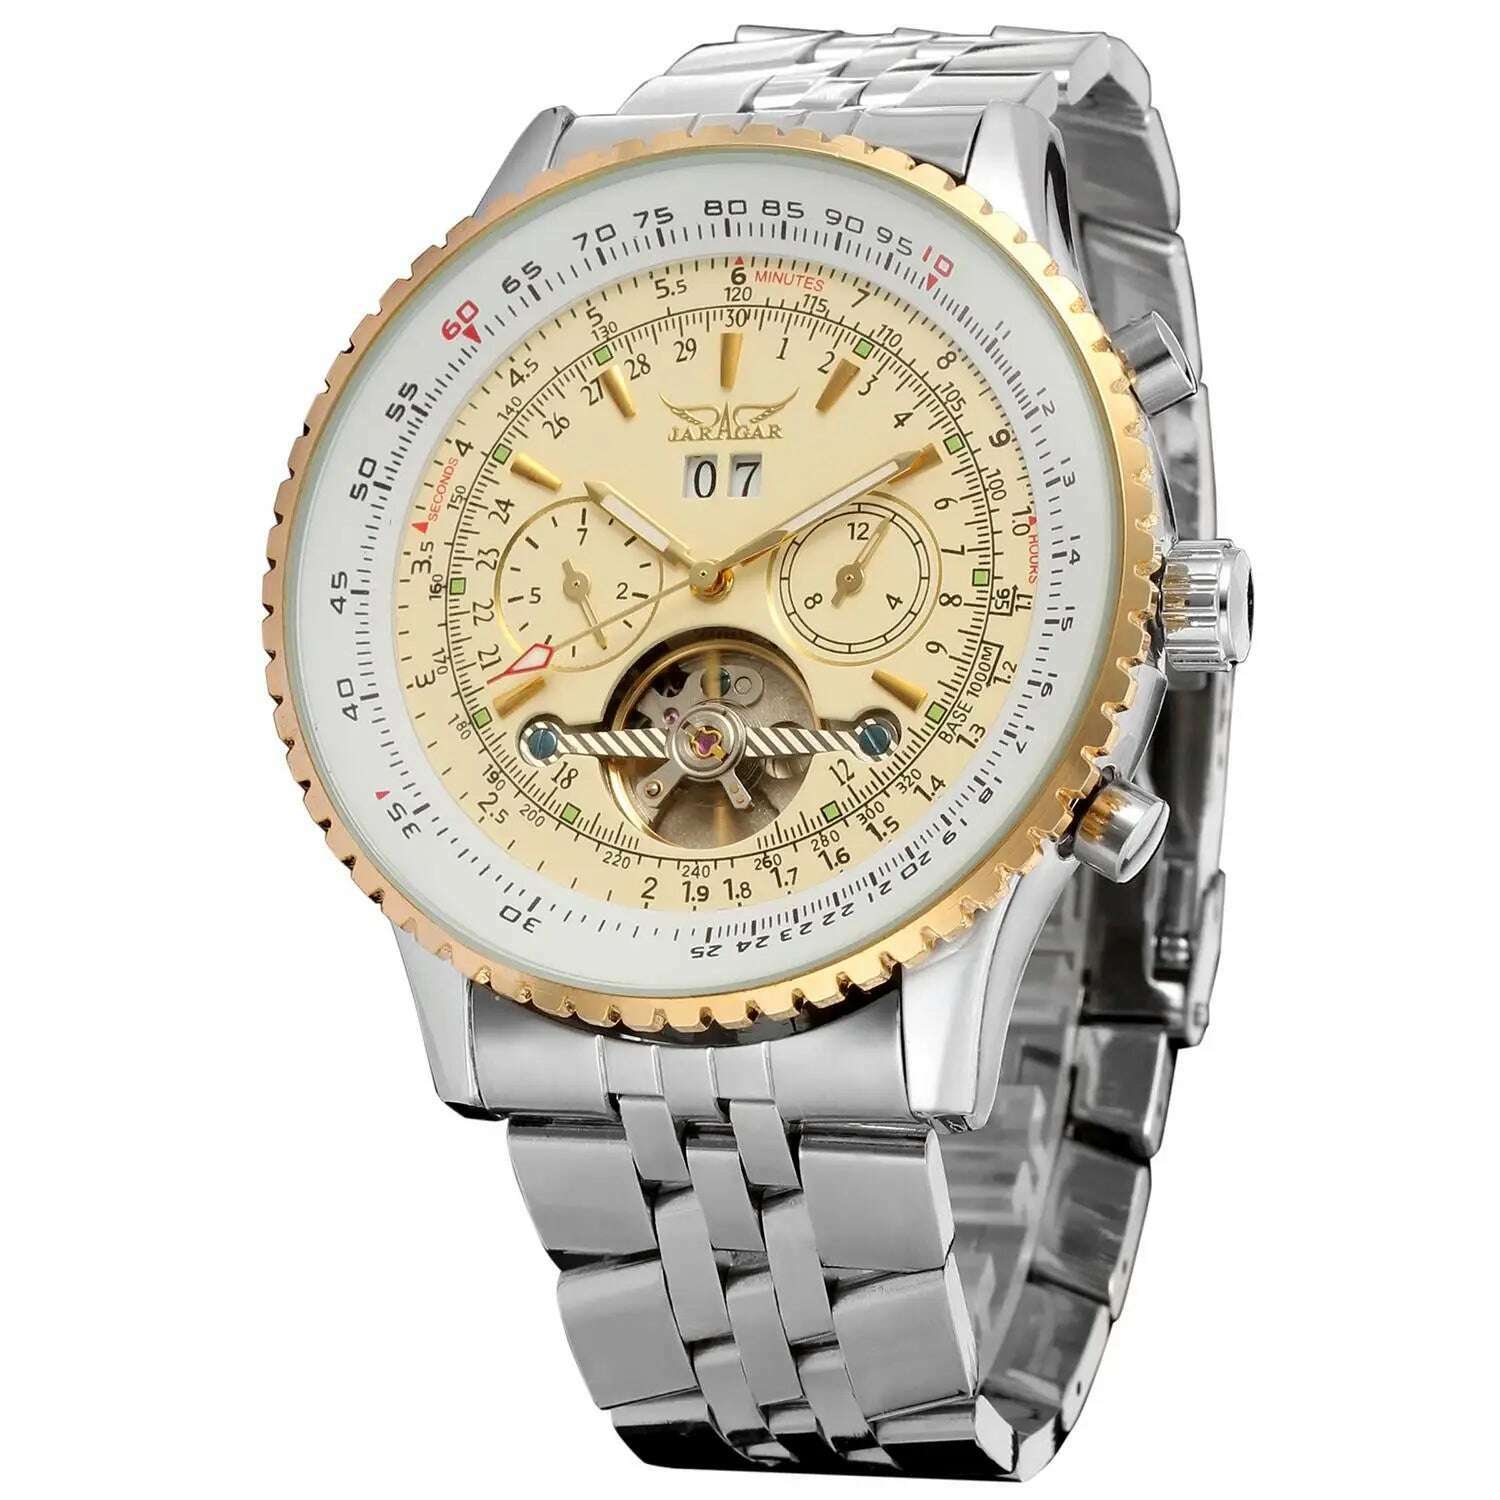 KIMLUD, 2019 Jaragar Top Brand Mens Watches Luxury Men Military Sport Wristwatch Automatic Mechanical Tourbillon Clock Relogio Masculino, Gold Gold, KIMLUD Womens Clothes